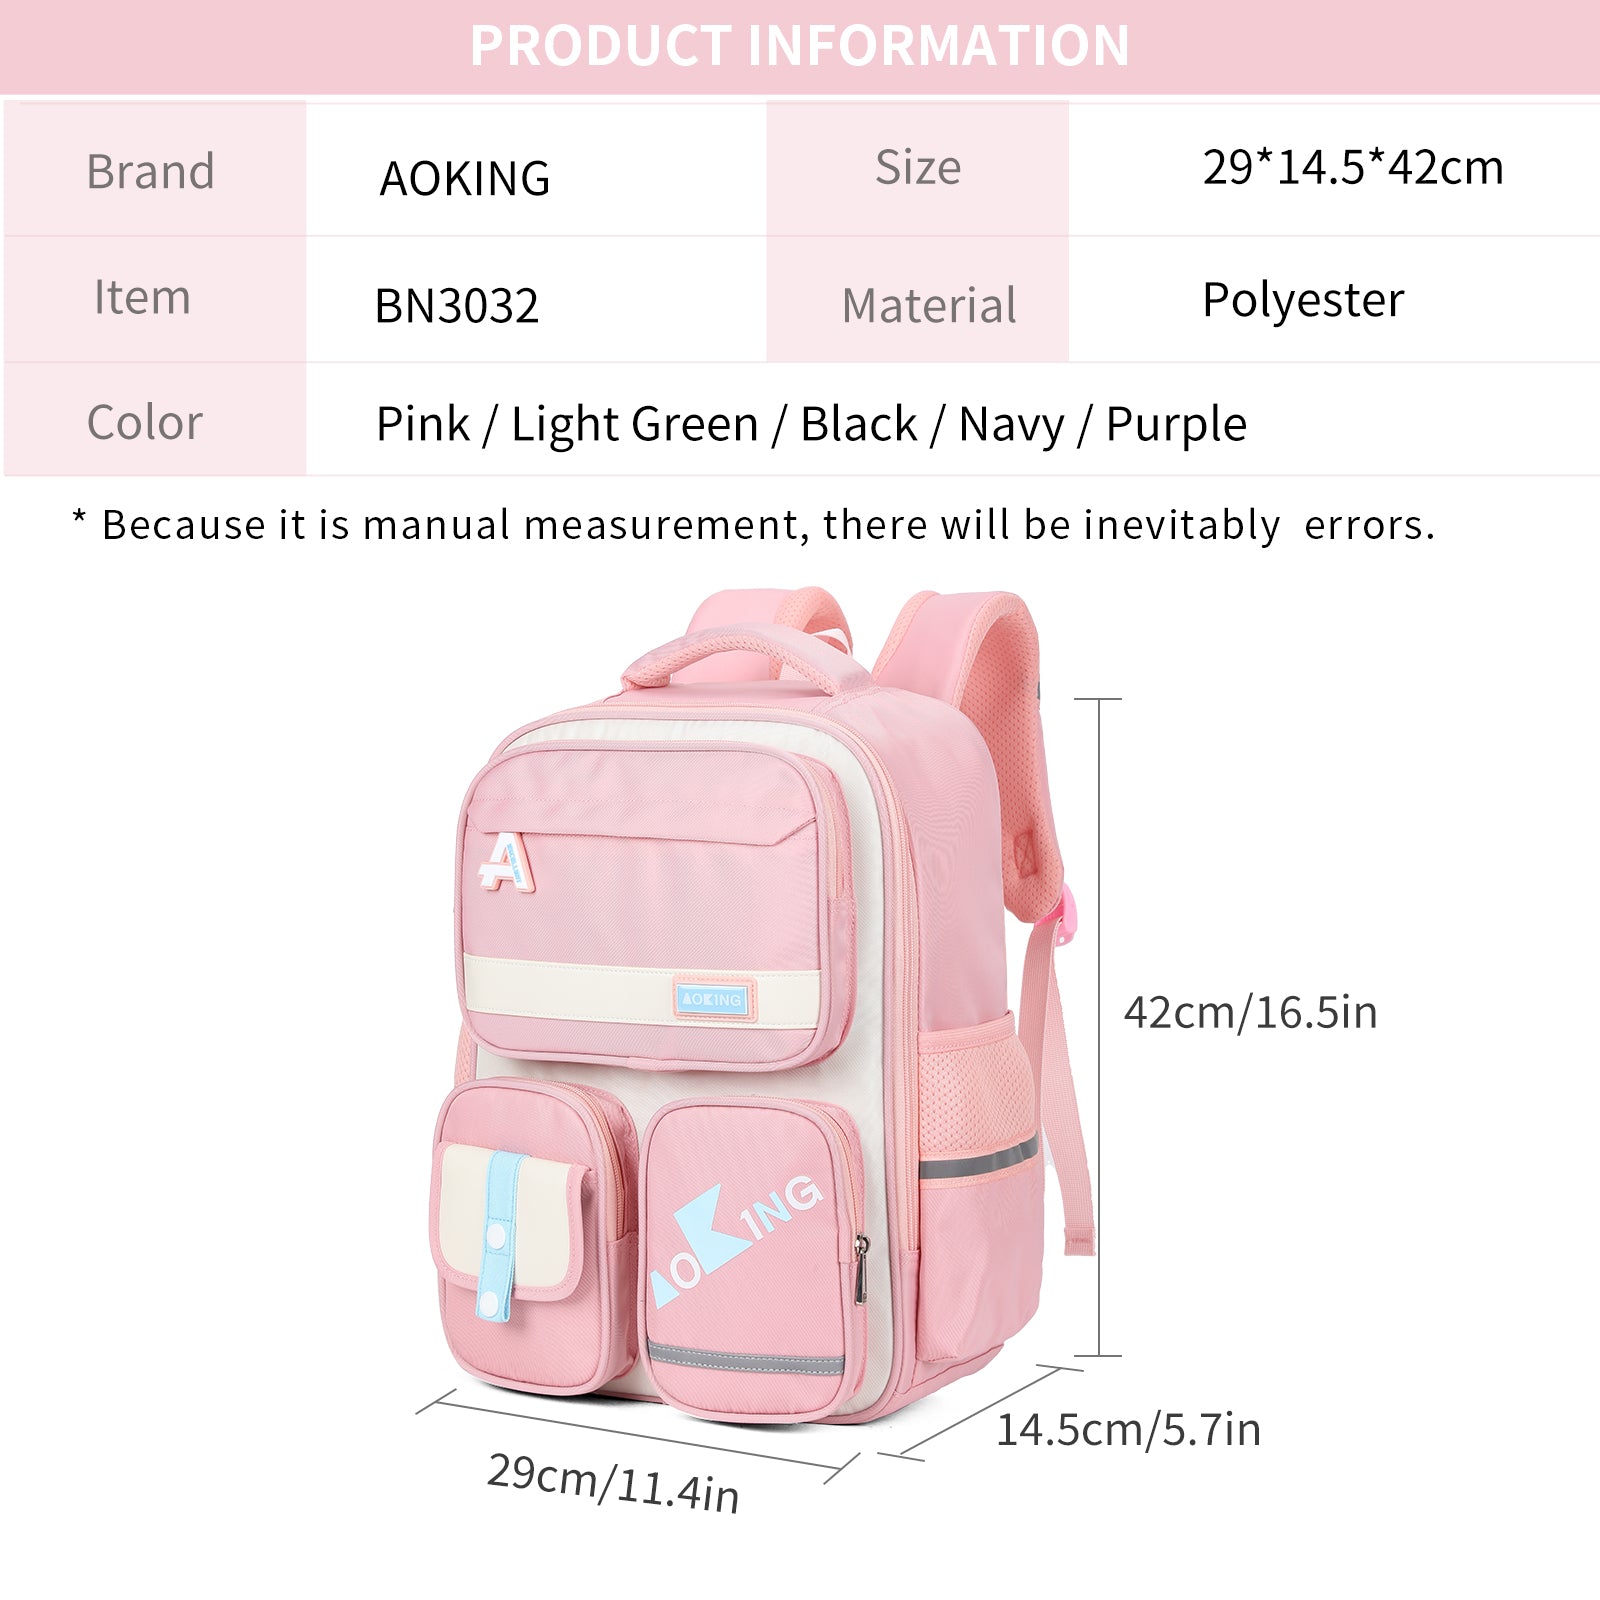 Aoking Casual Lightweight School Backpack BN3032